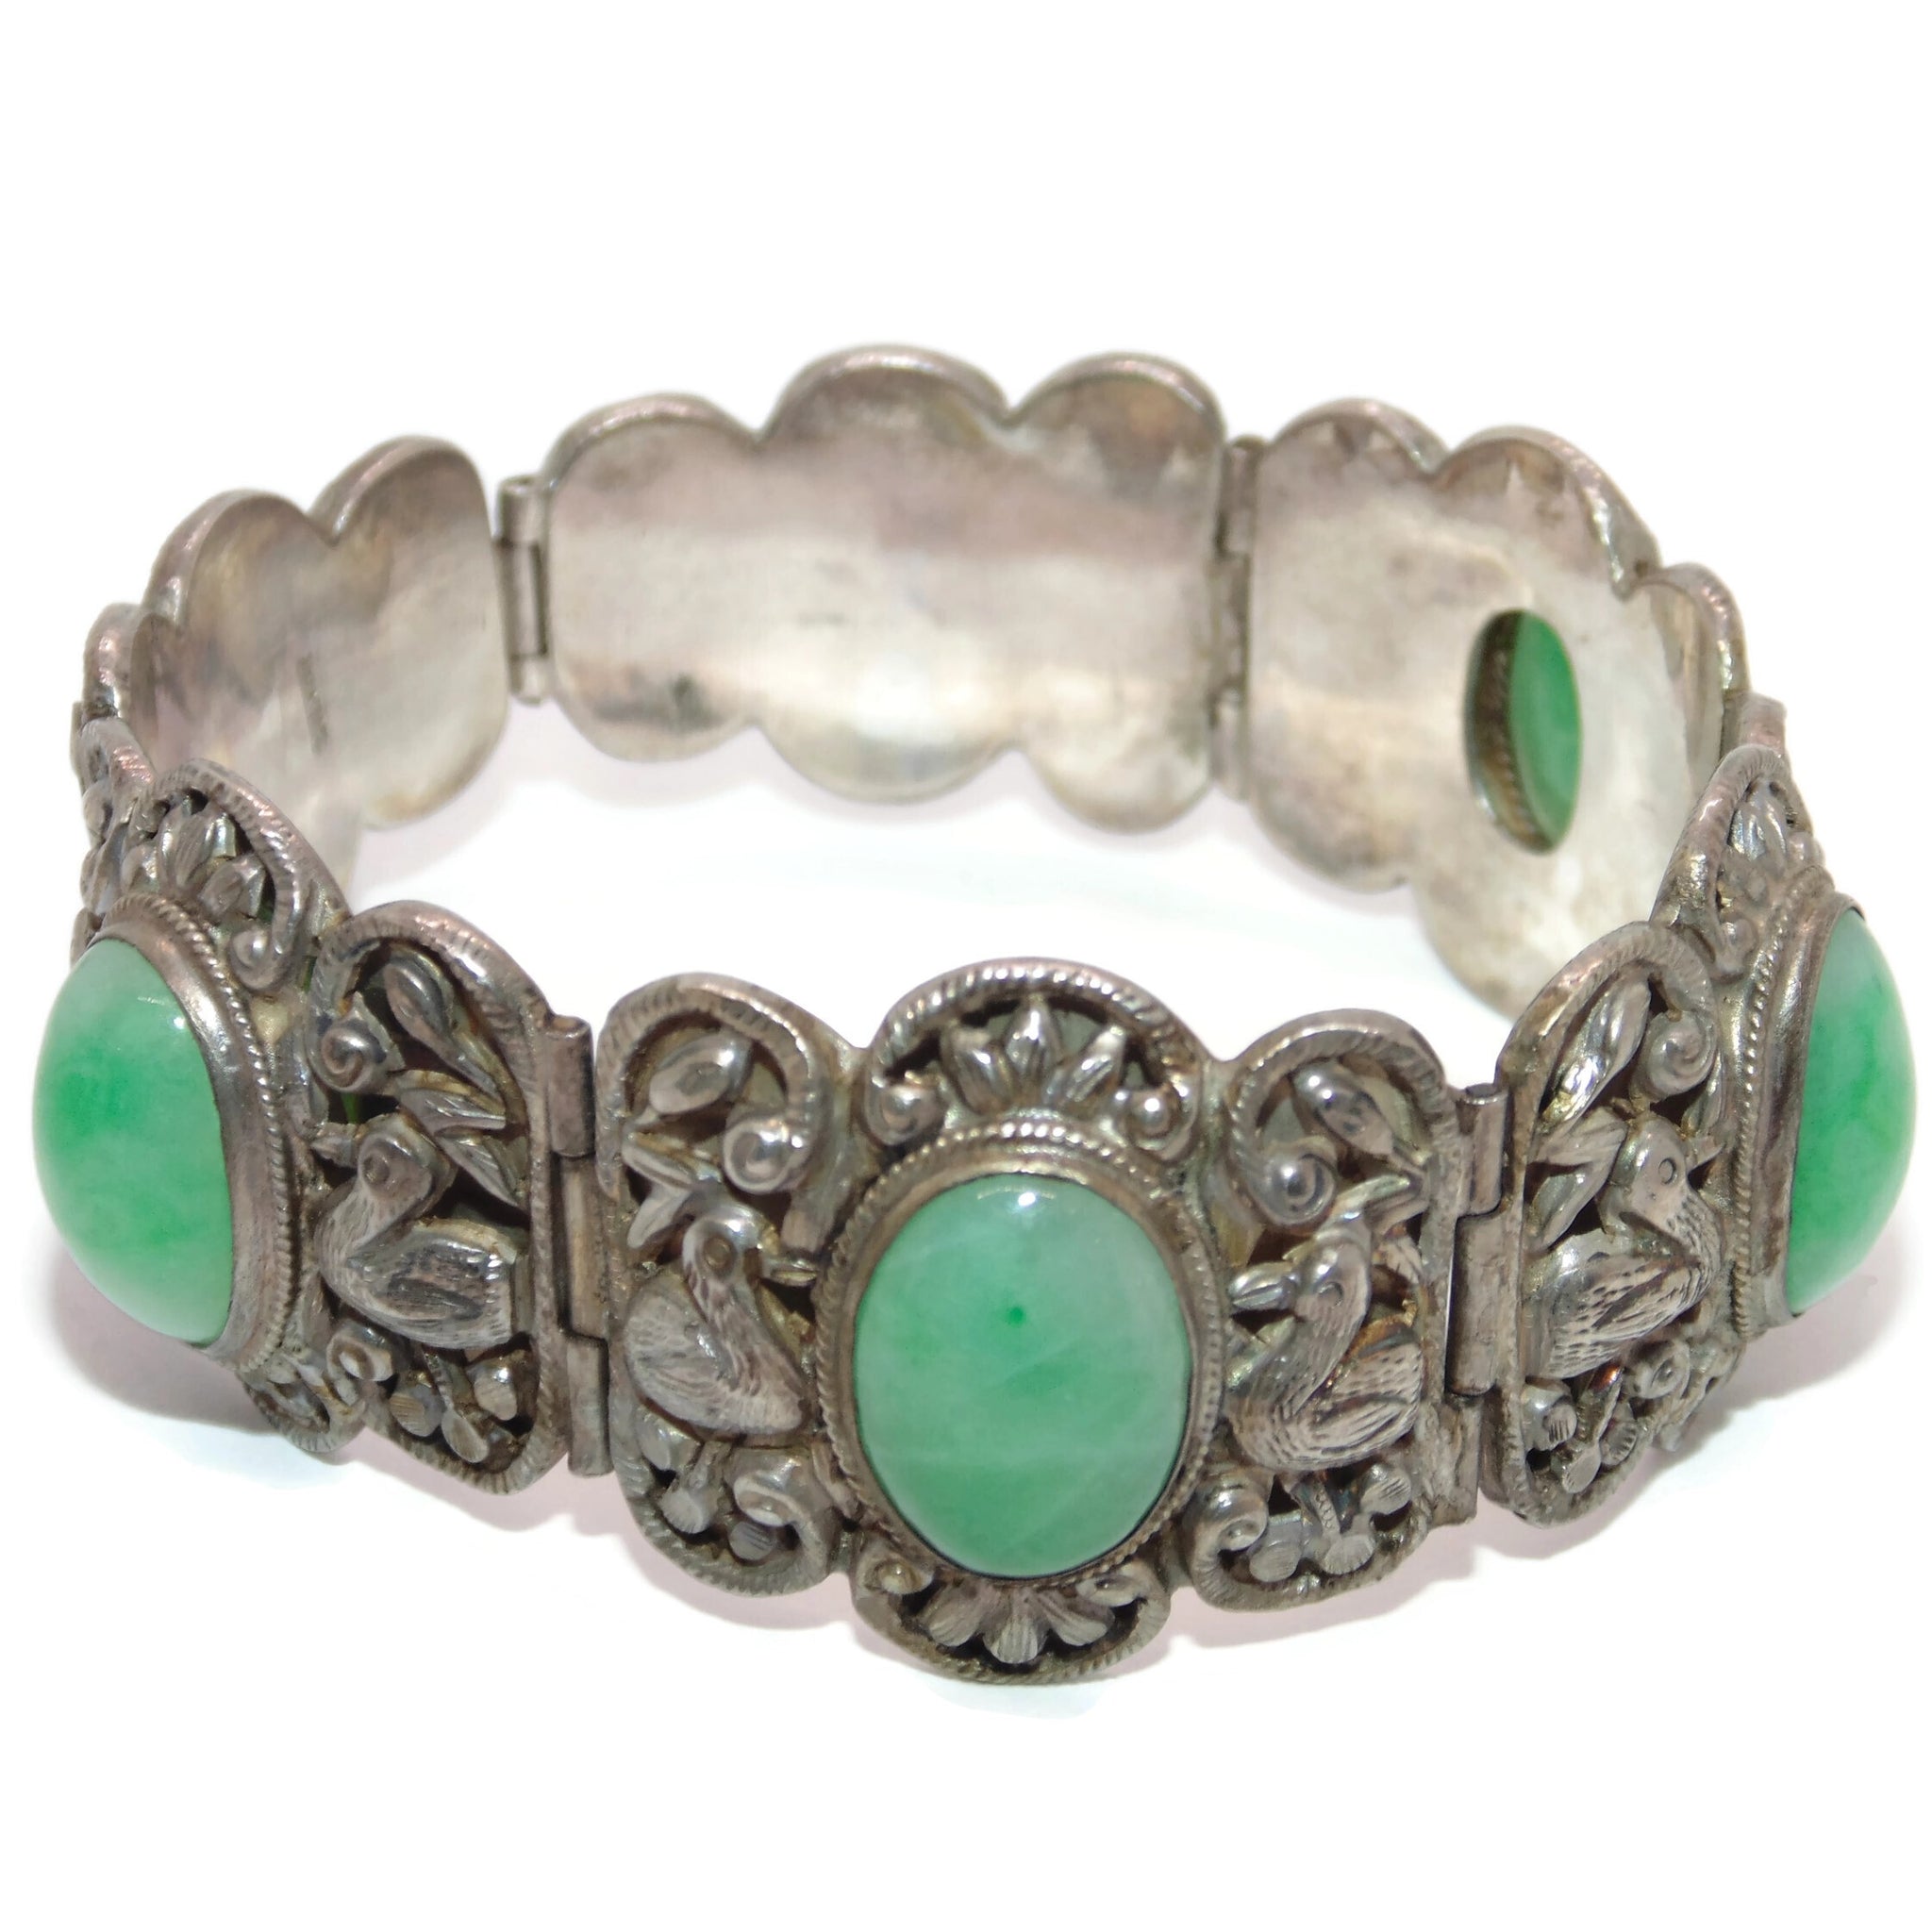 Natural Grade AAA Icy green Jade jadeite artistic carving bracelet bangle  60mm | eBay